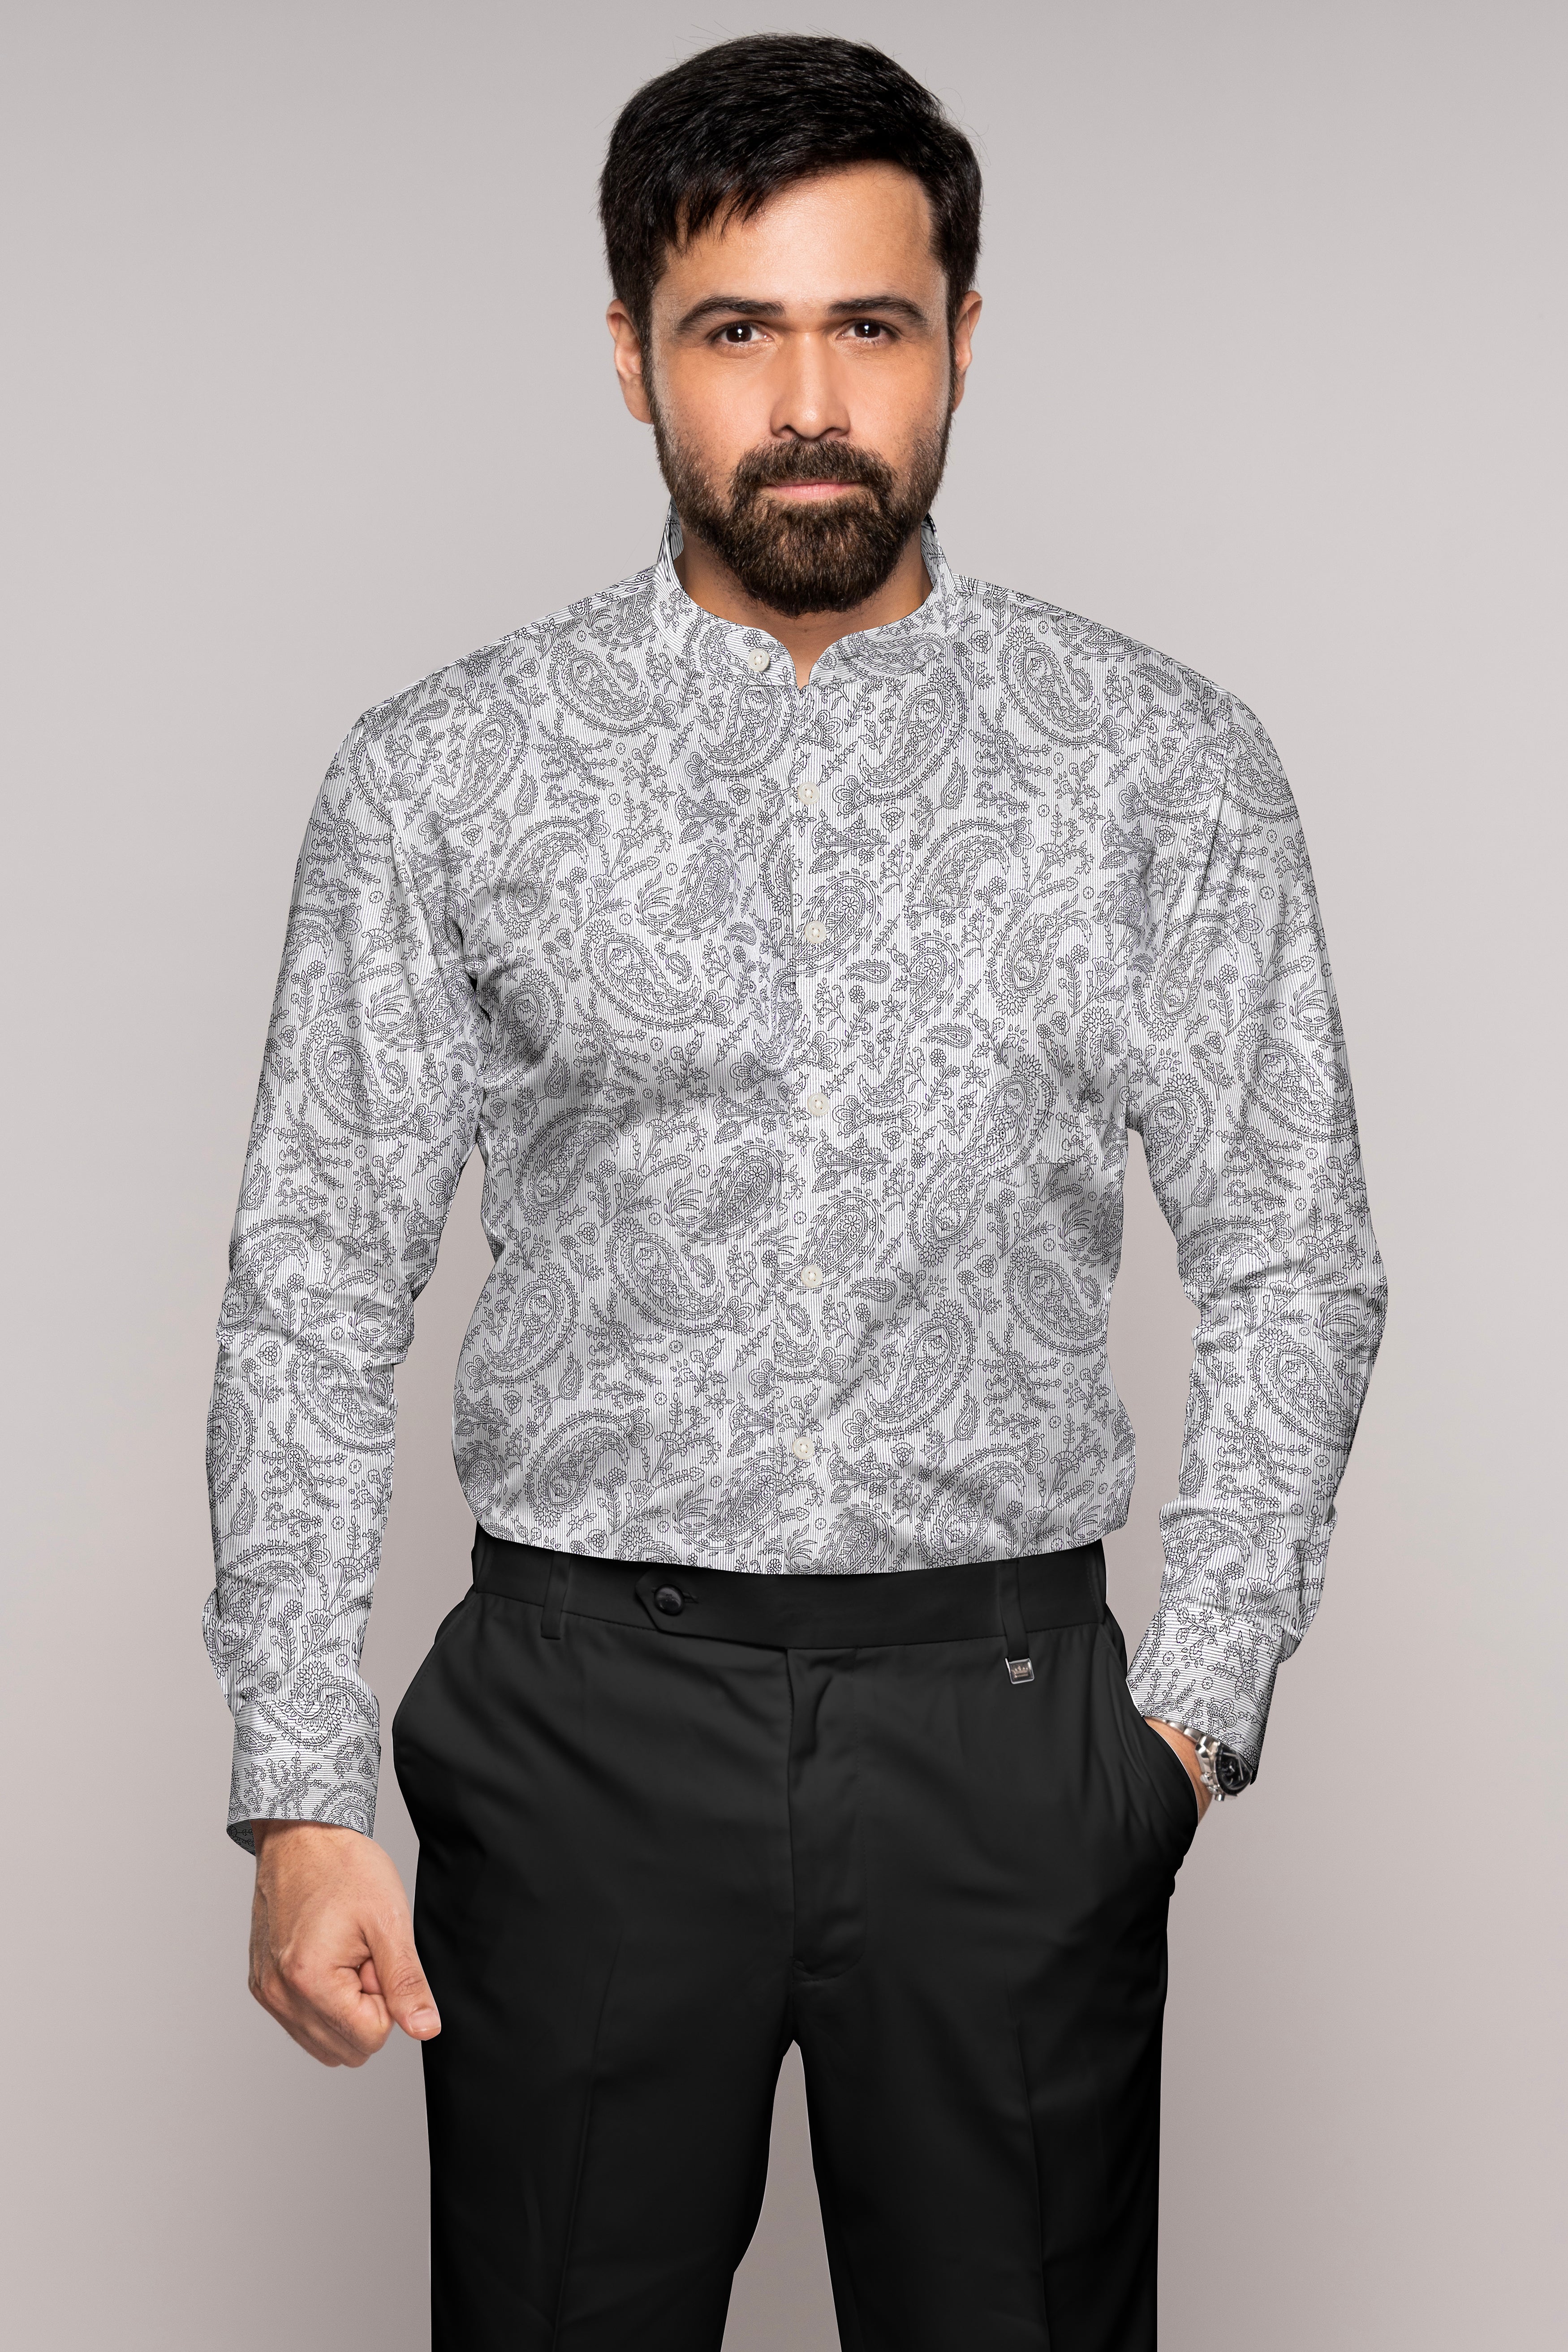 Nobel Gray and Black Paisley Printed Super Soft Premium Cotton Designer Shirt